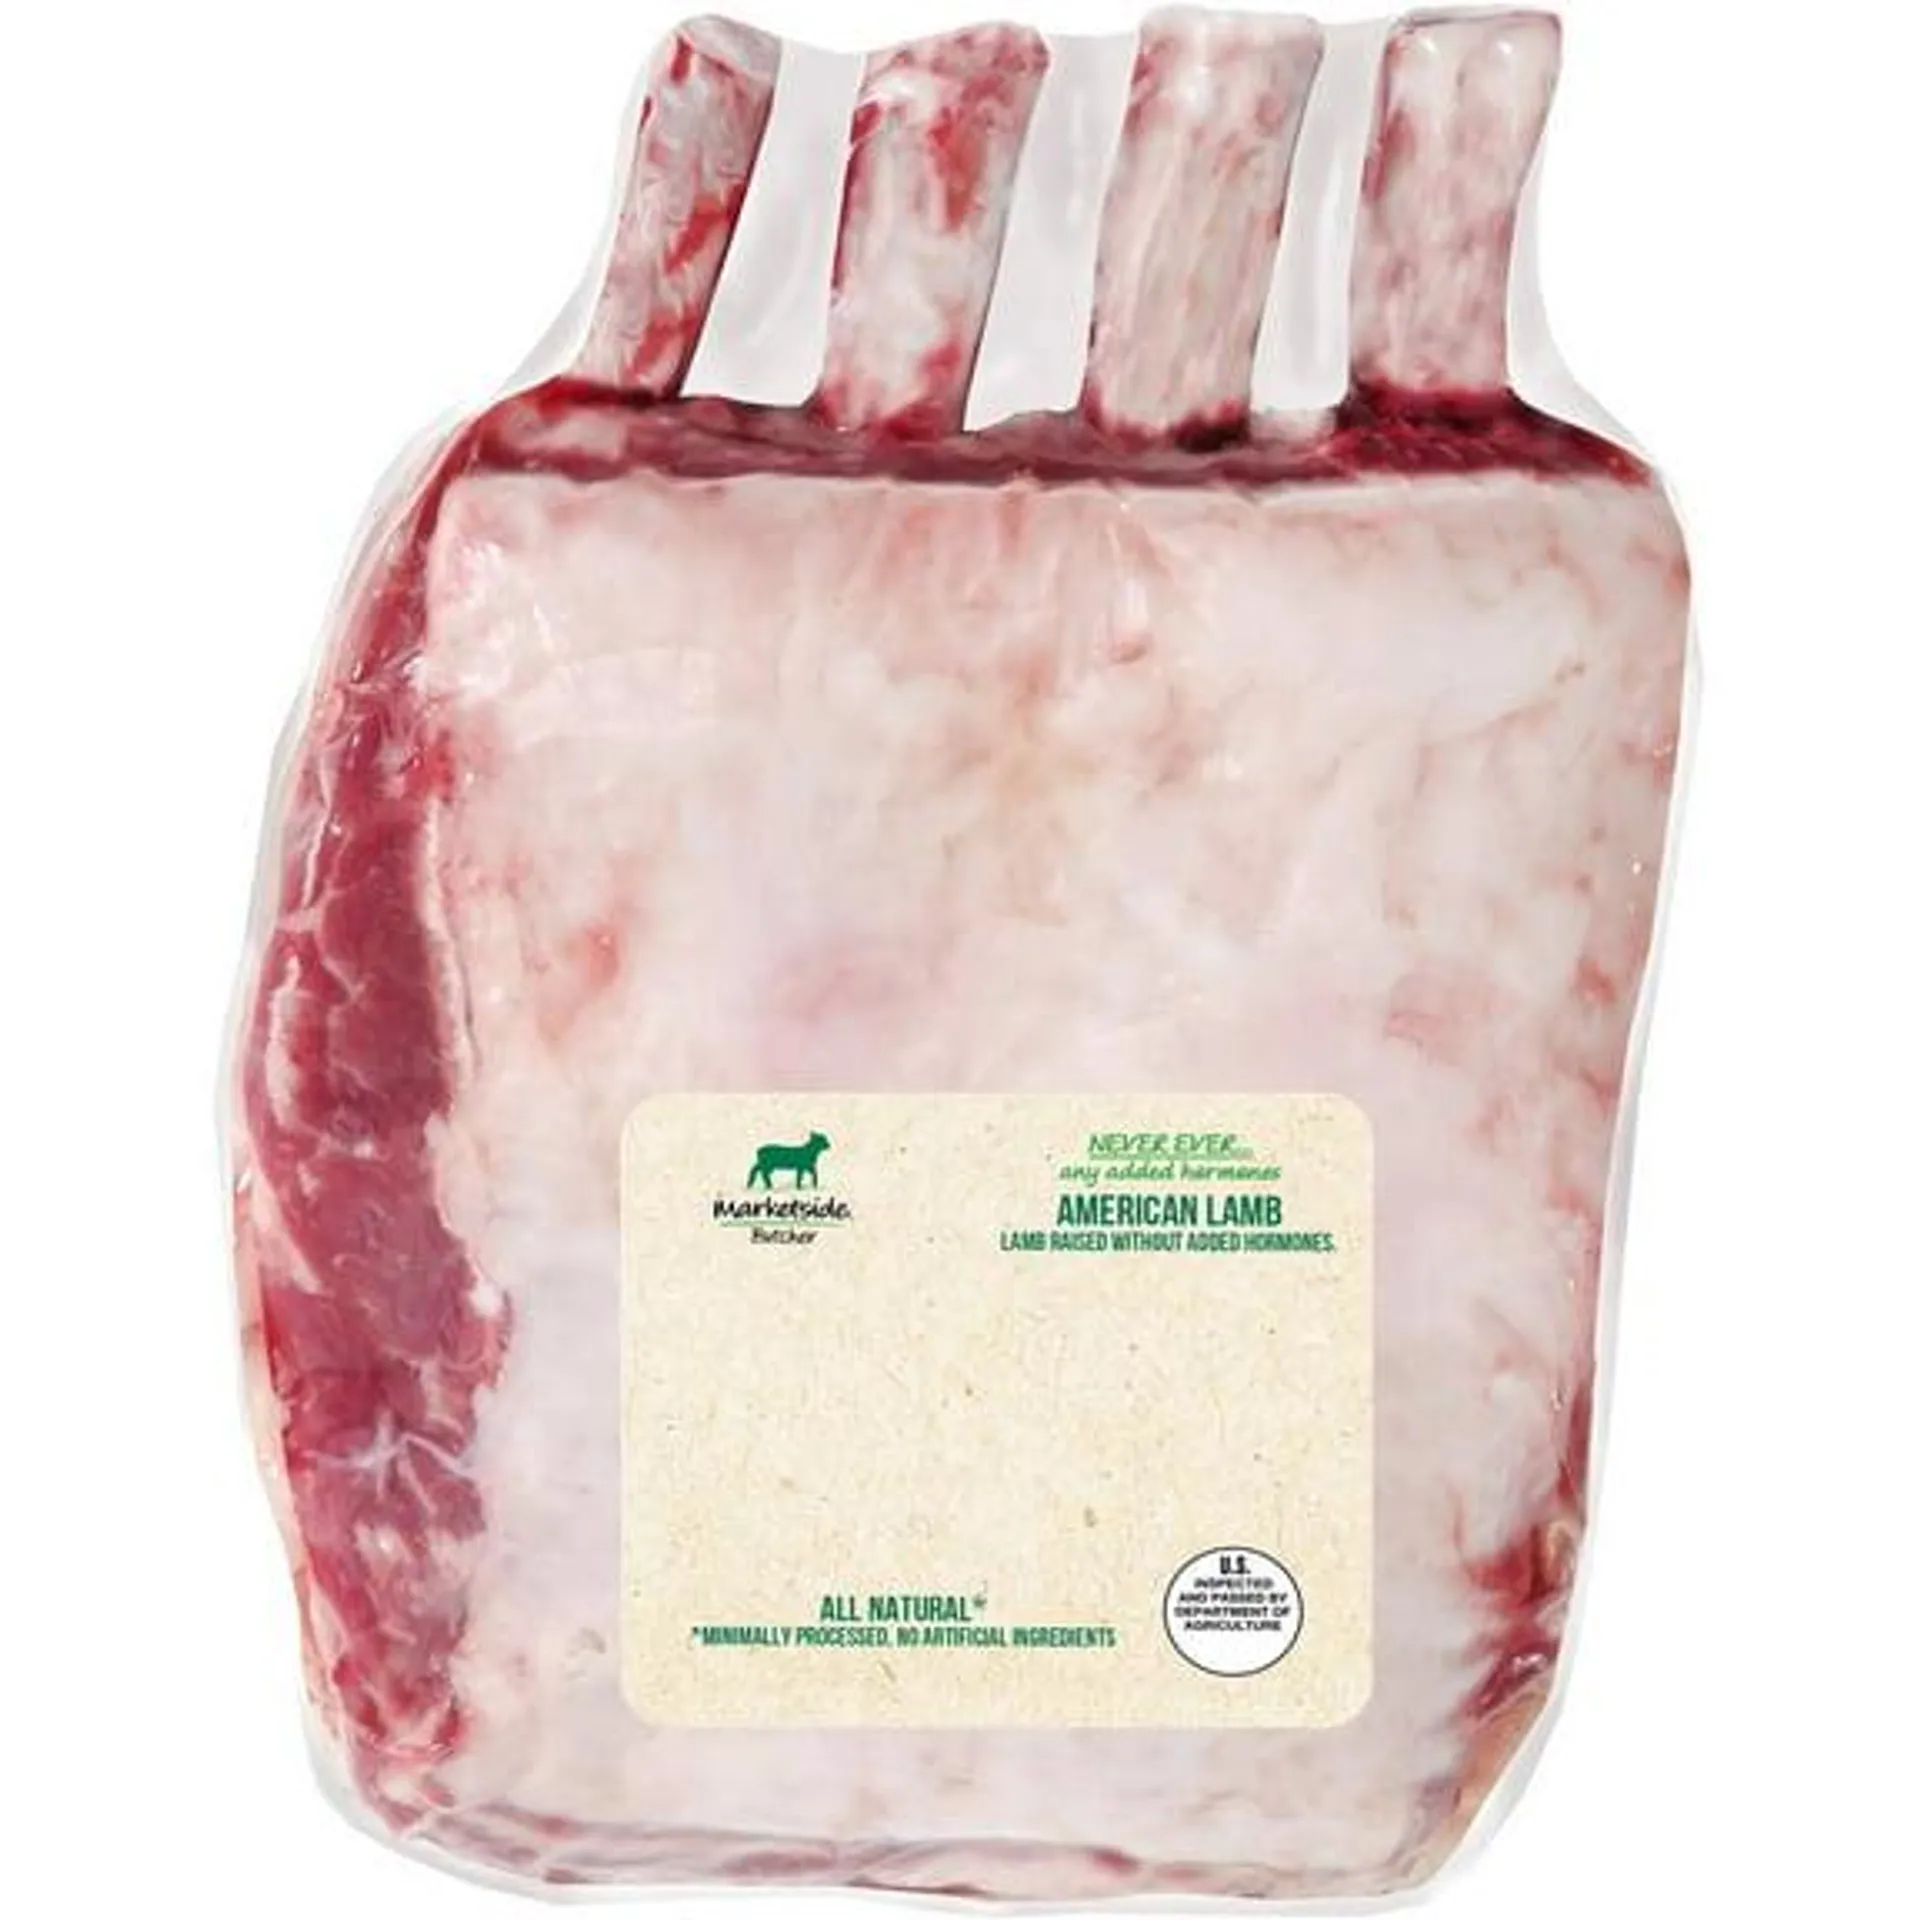 Marketside Butcher Rack of Lamb, 0.5-3.0 lb